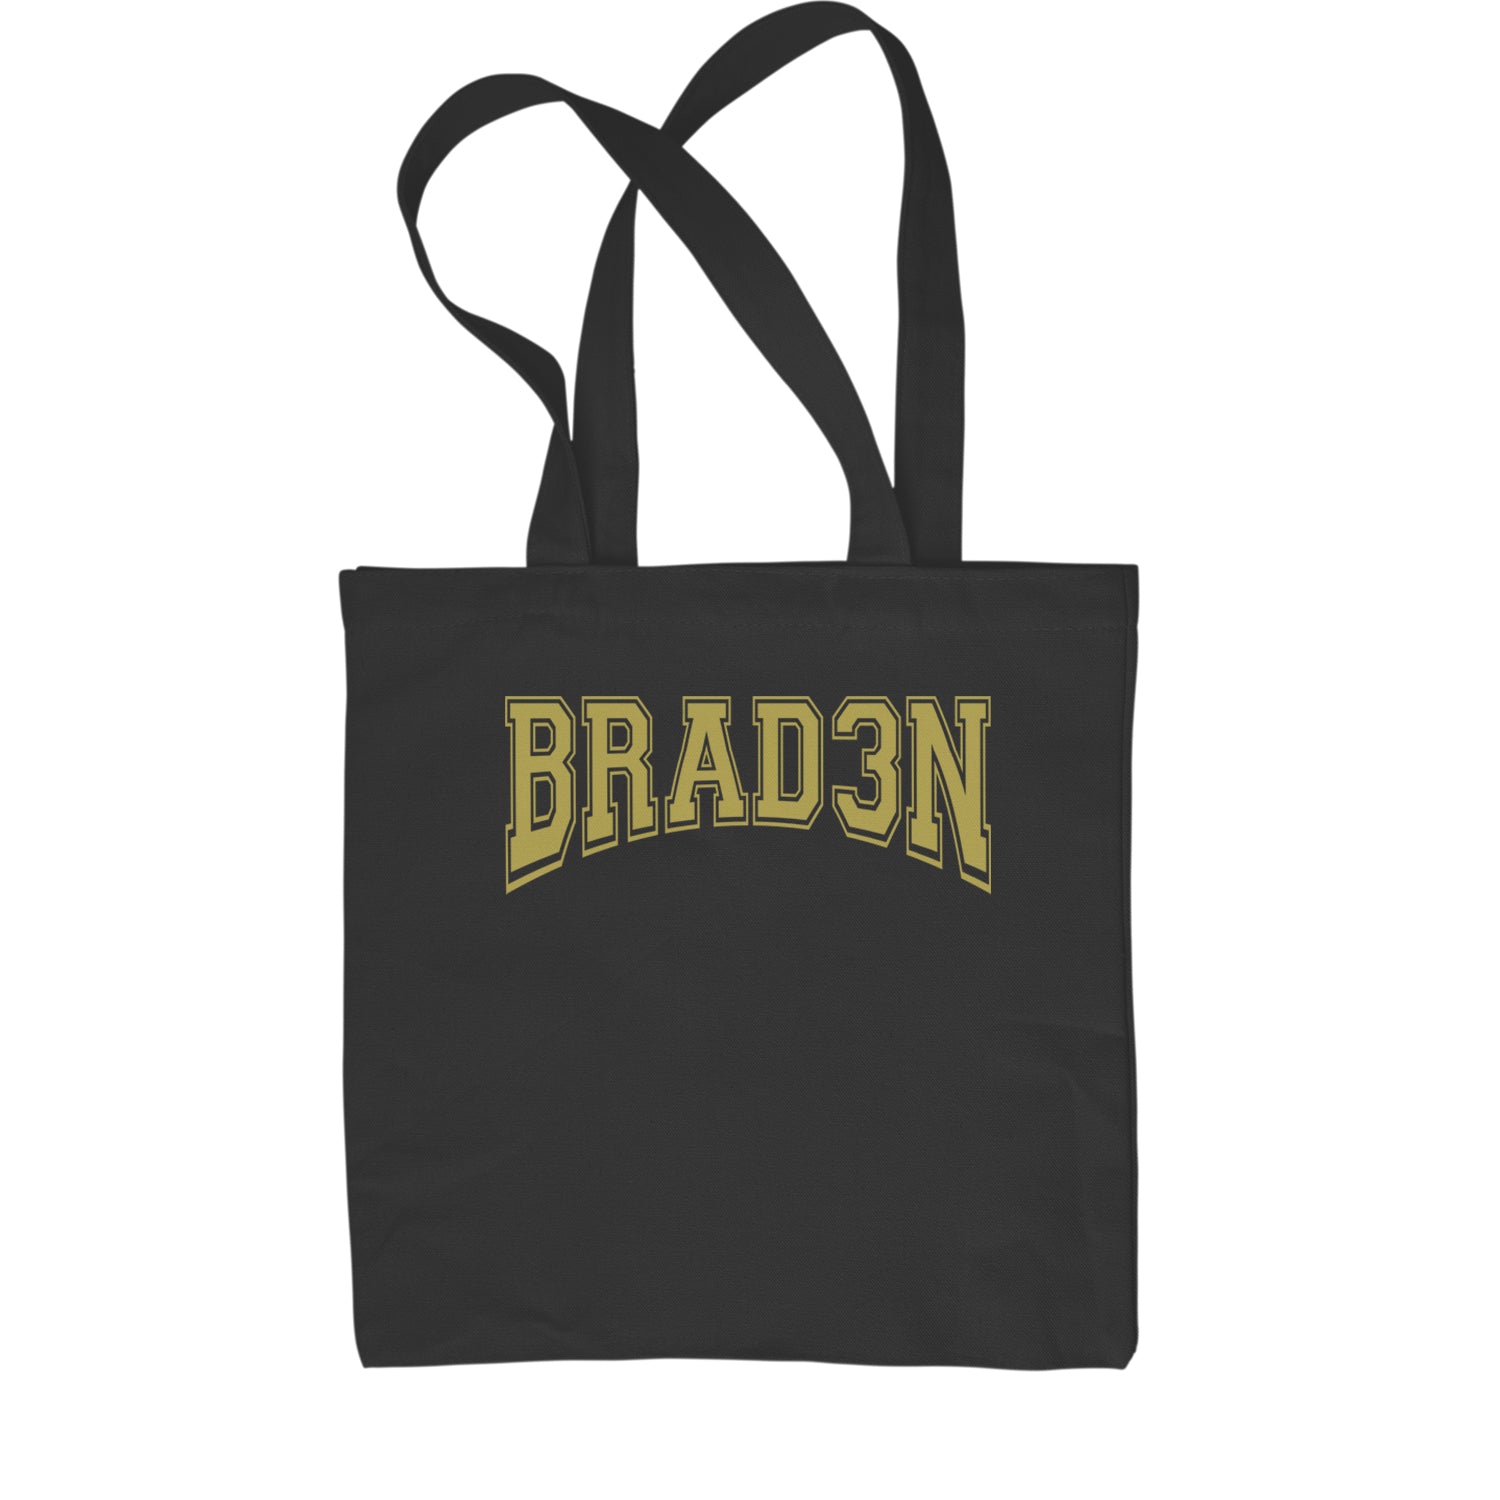 Braden Brad3n Basketball Shopping Tote Bag